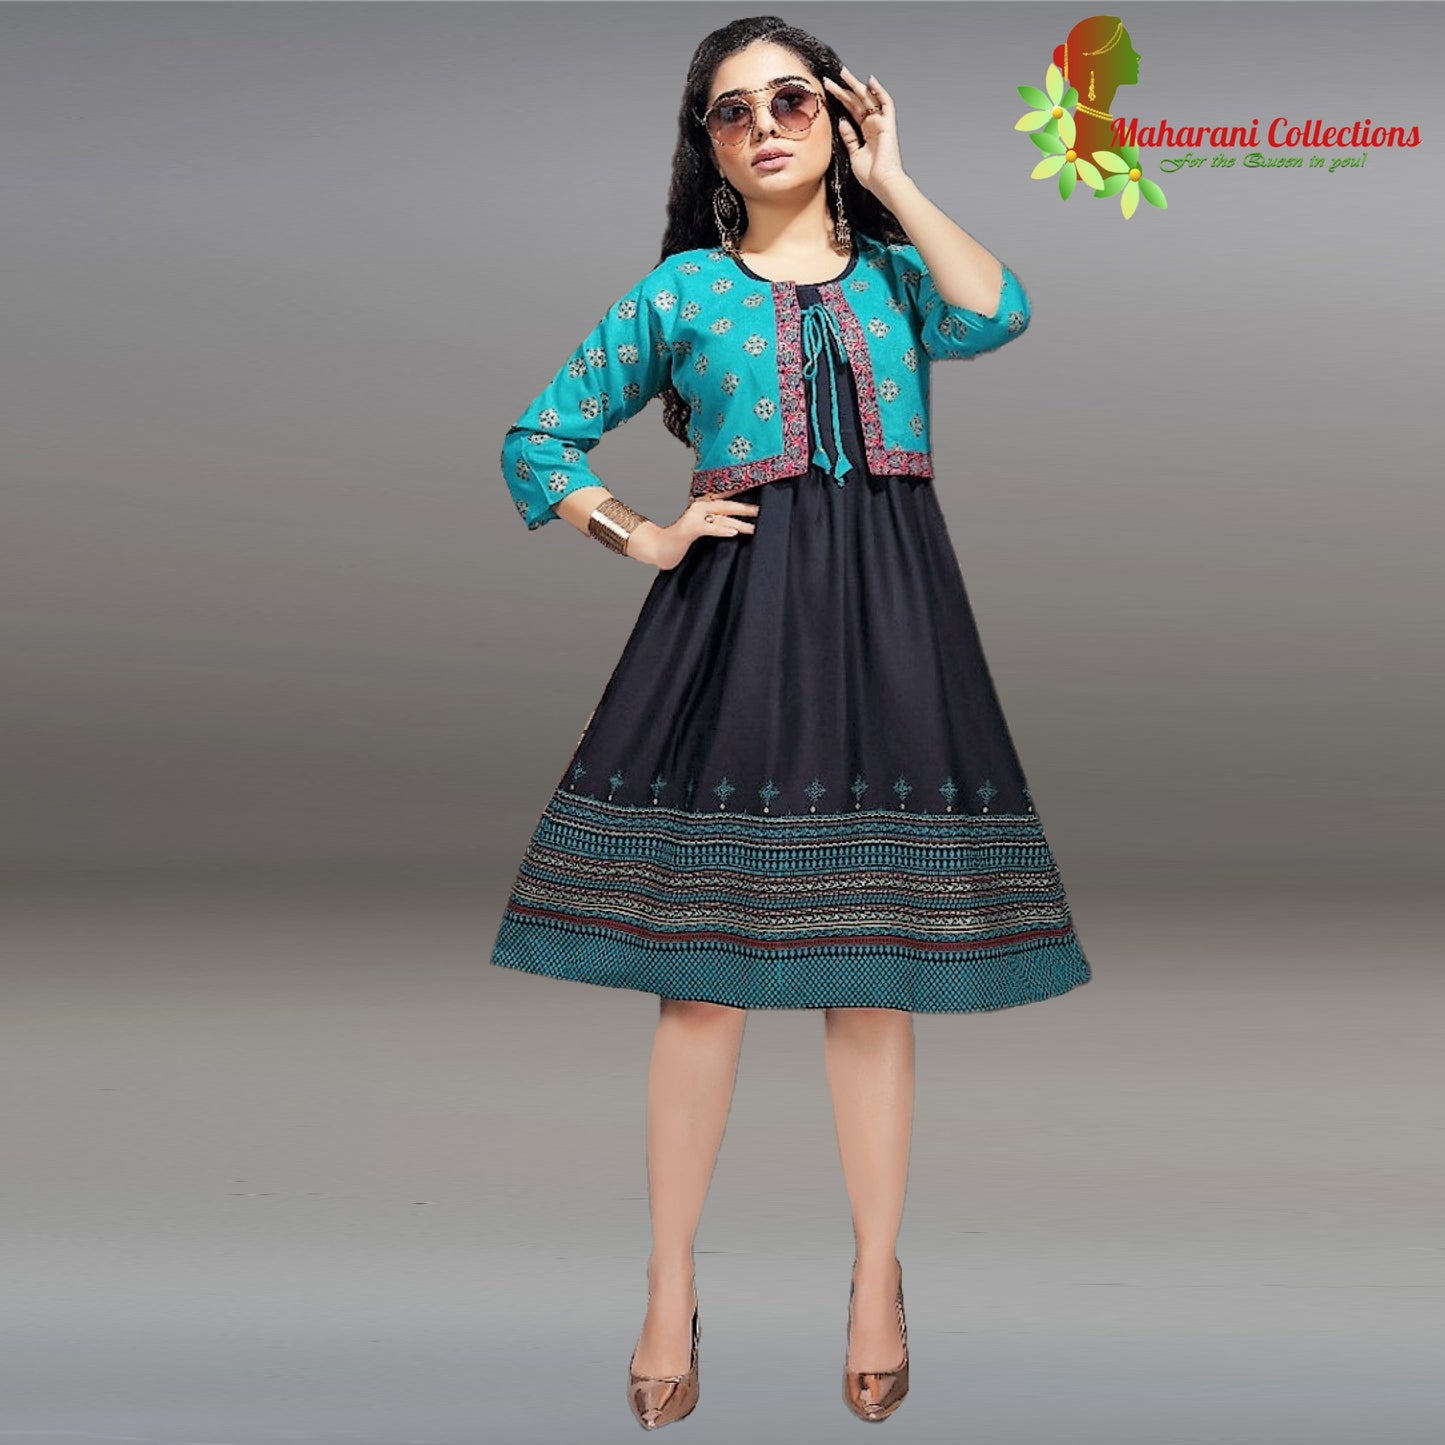 Maharani's Designer Short Dress - Navy Blue (M) - Rayon and Cotton